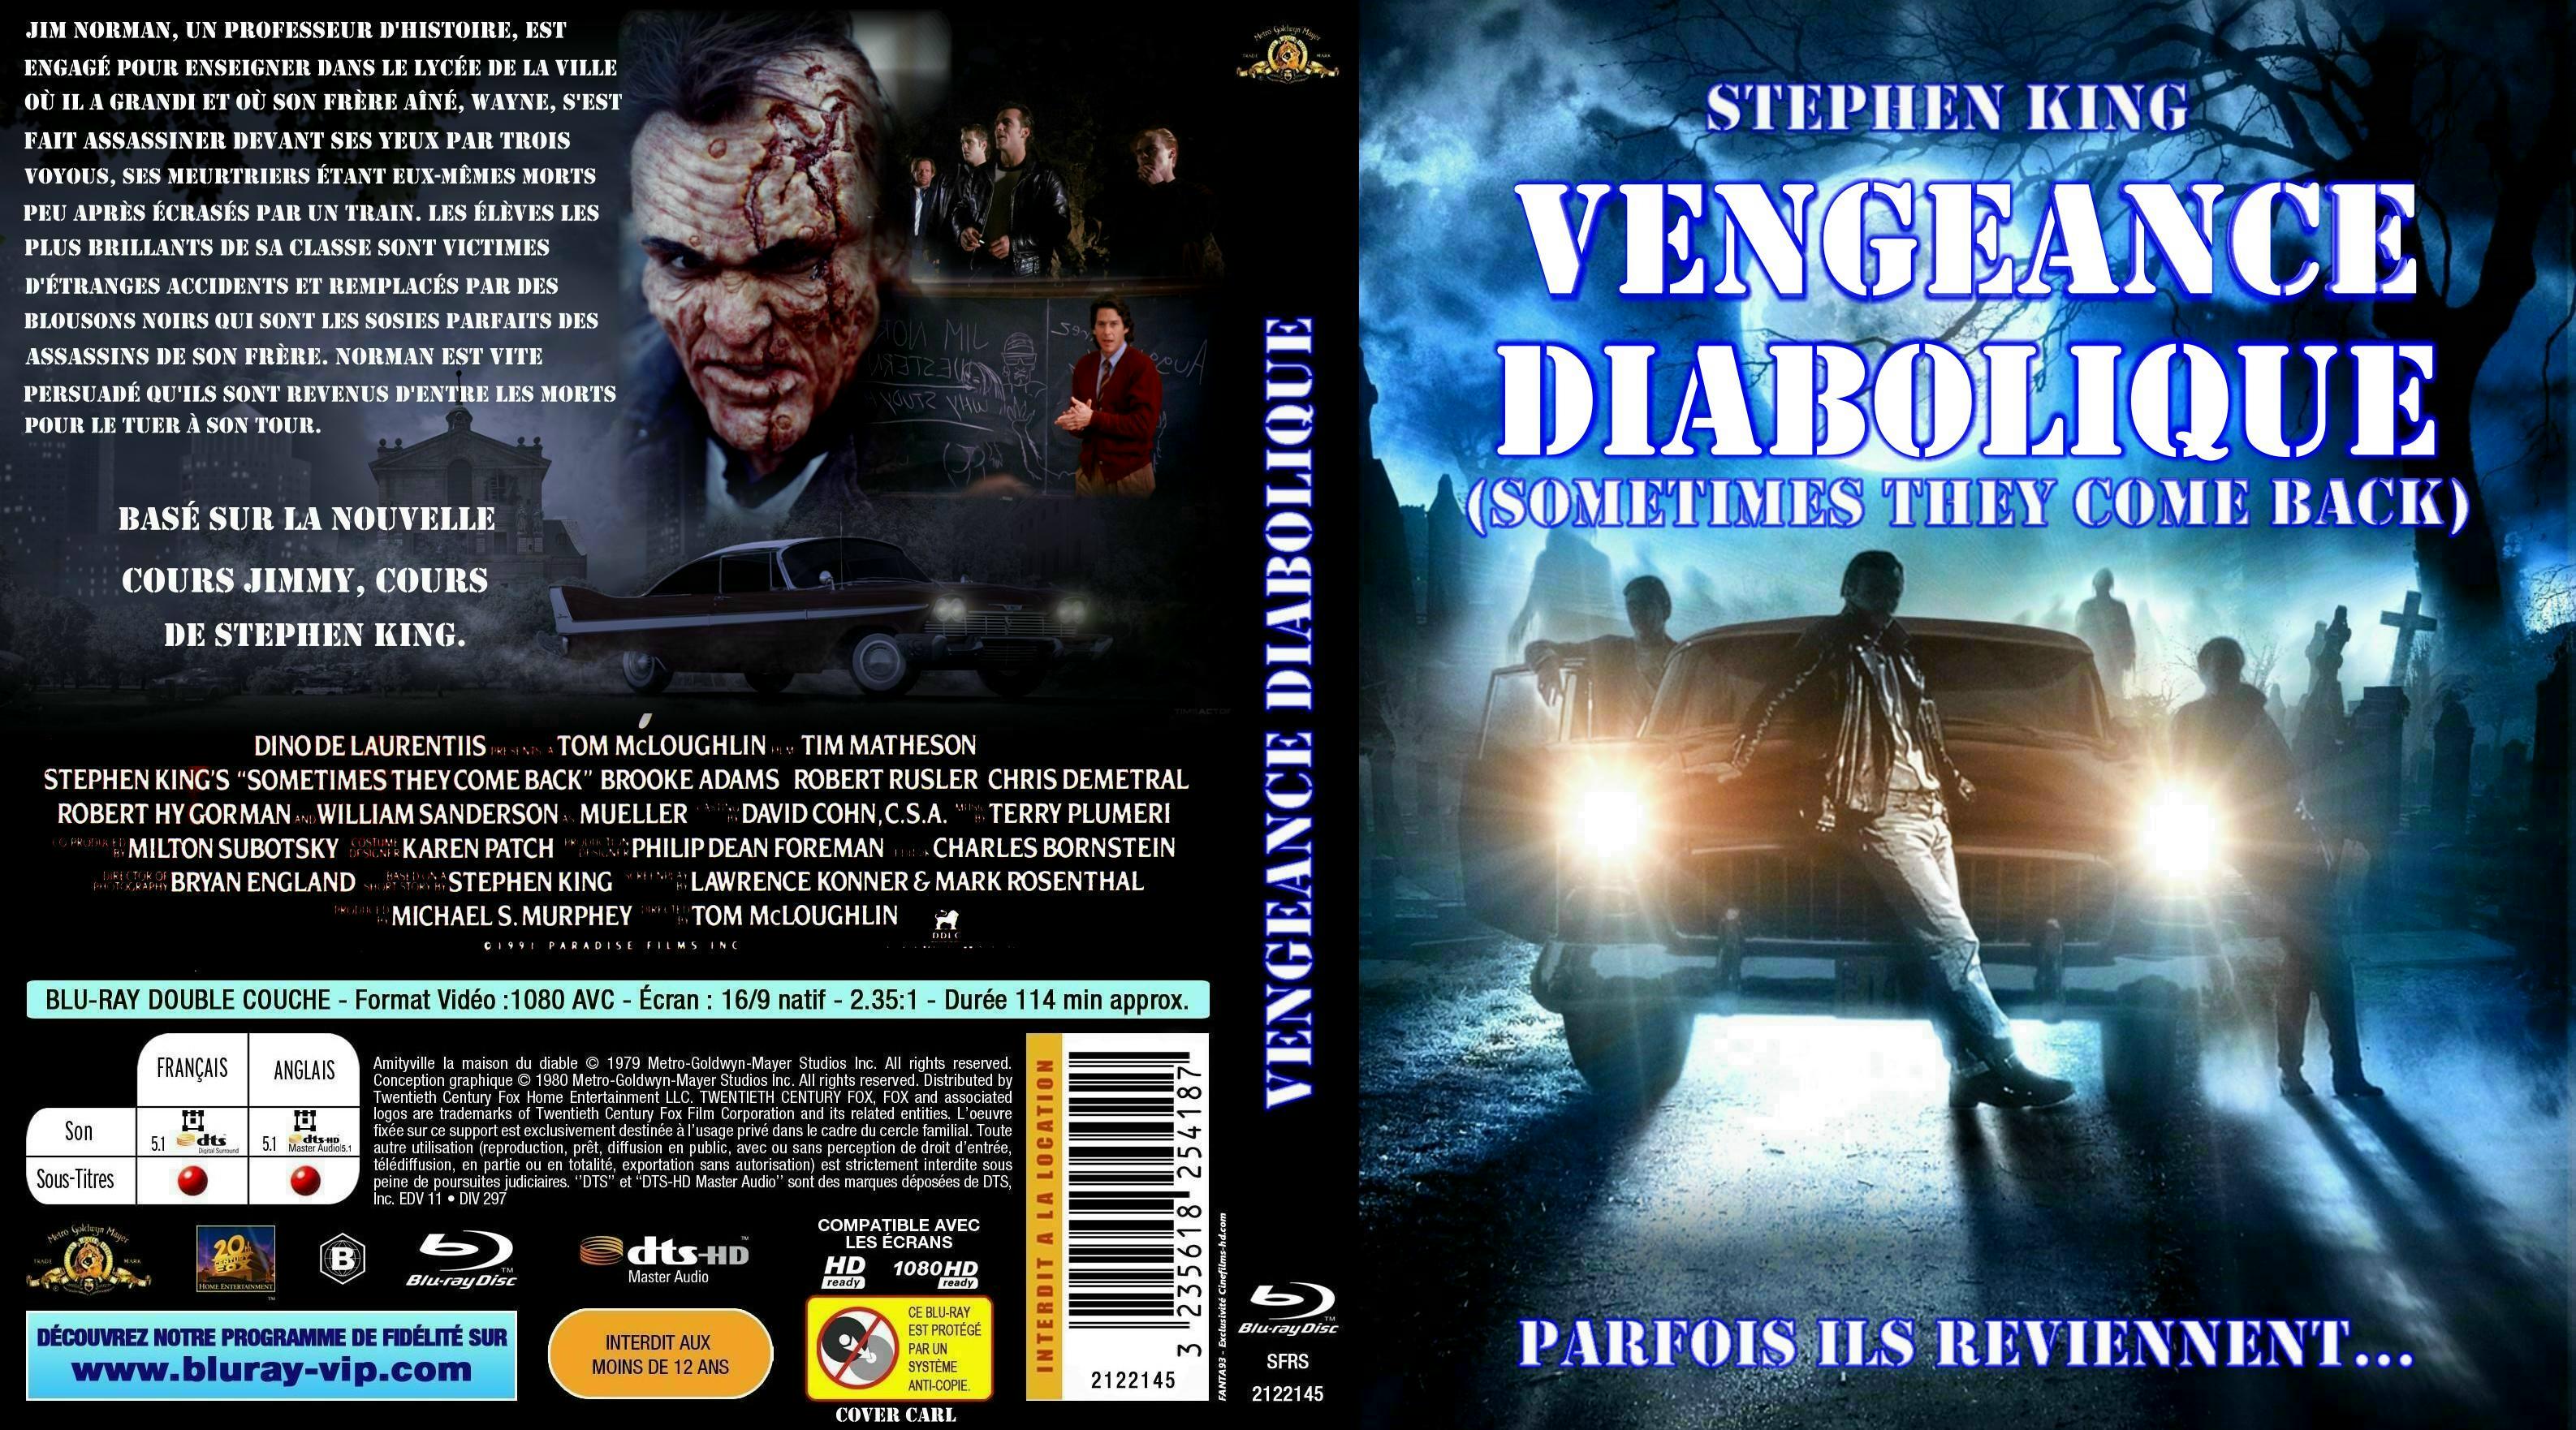 Jaquette DVD Vengeance diabolique custom (BLU-RAY)